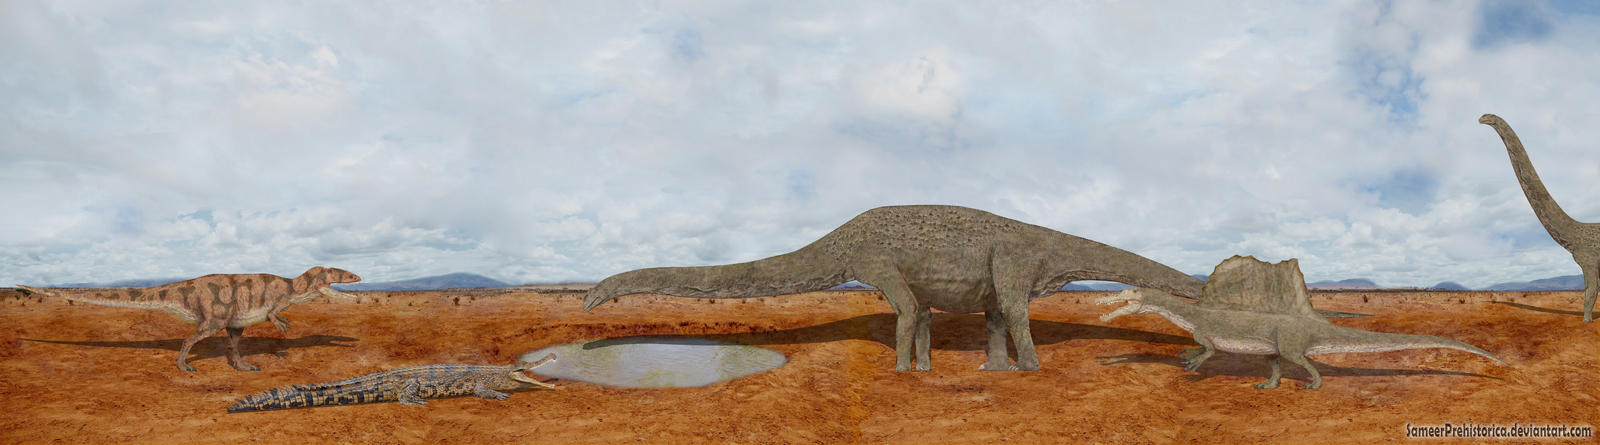 Carcharodontosaurus vs Spinosaurus vs Sarcosuchus by ...